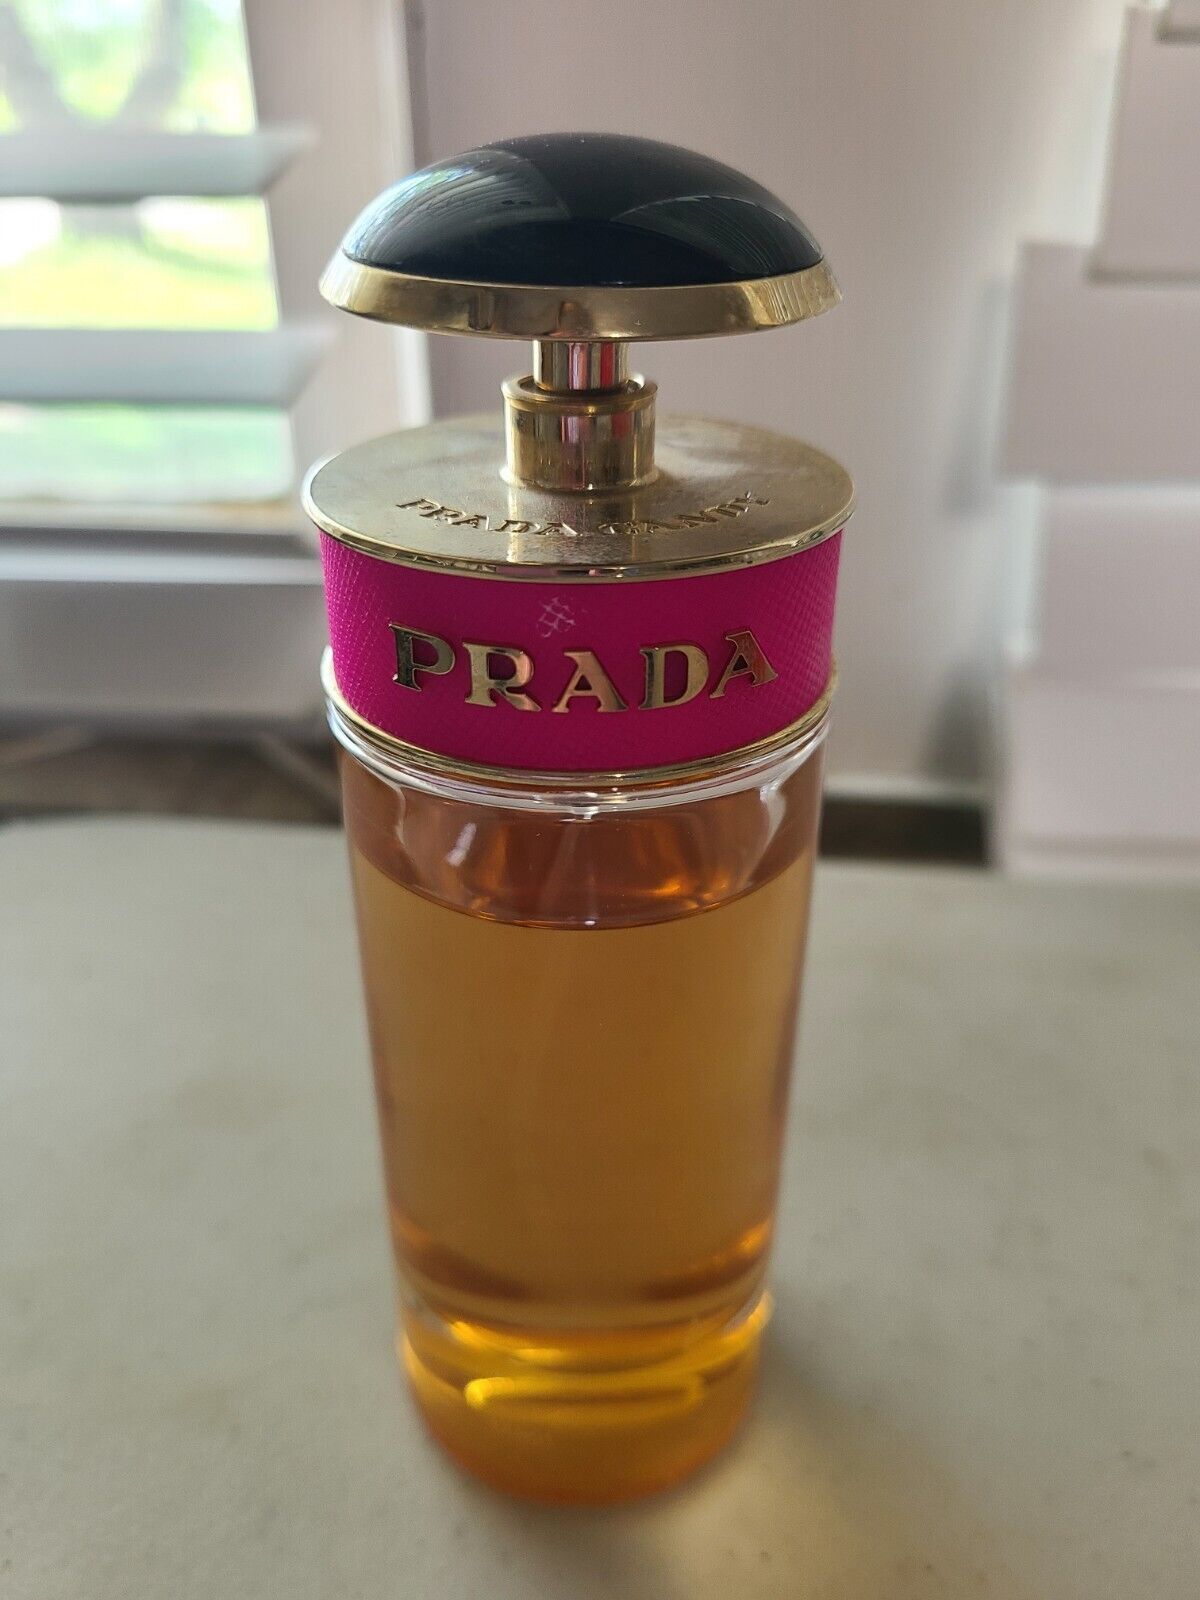 Prada Candy 2.7 oz  Eau de Parfum | 90% Full As Pictured Women’s Perfume Cologne